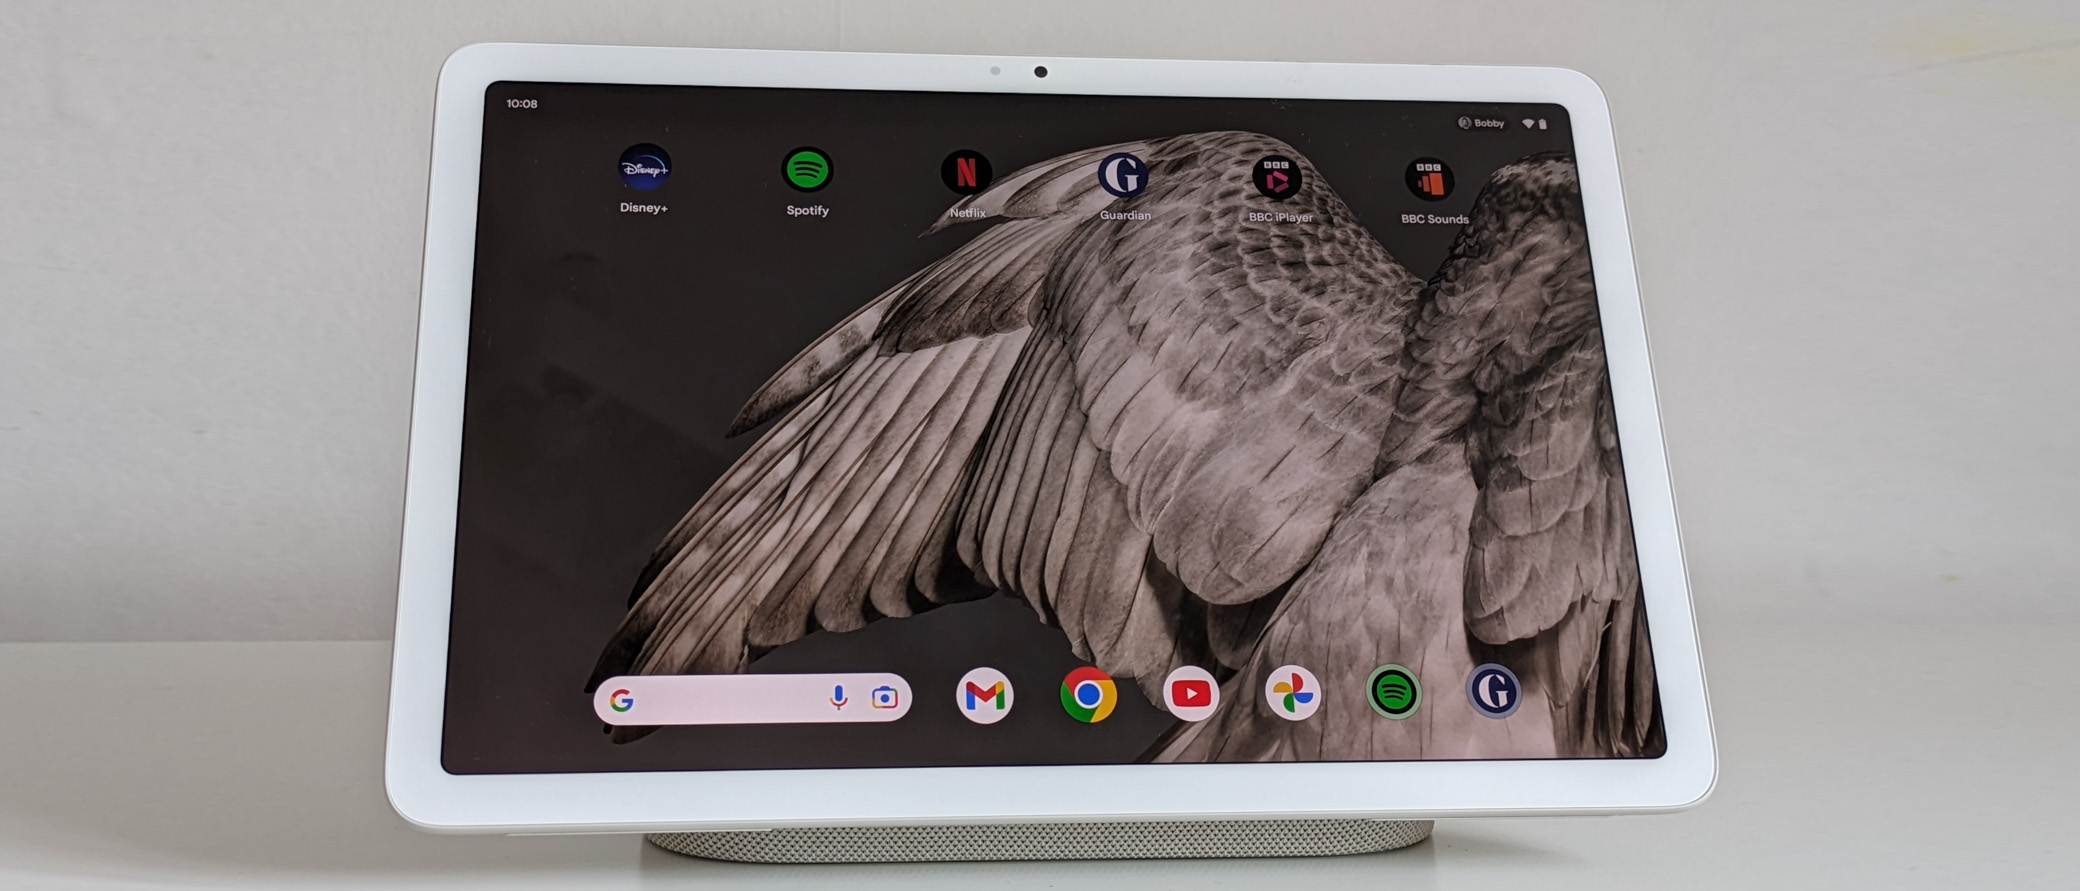 Google Pixel Tablet review | Digital Camera World